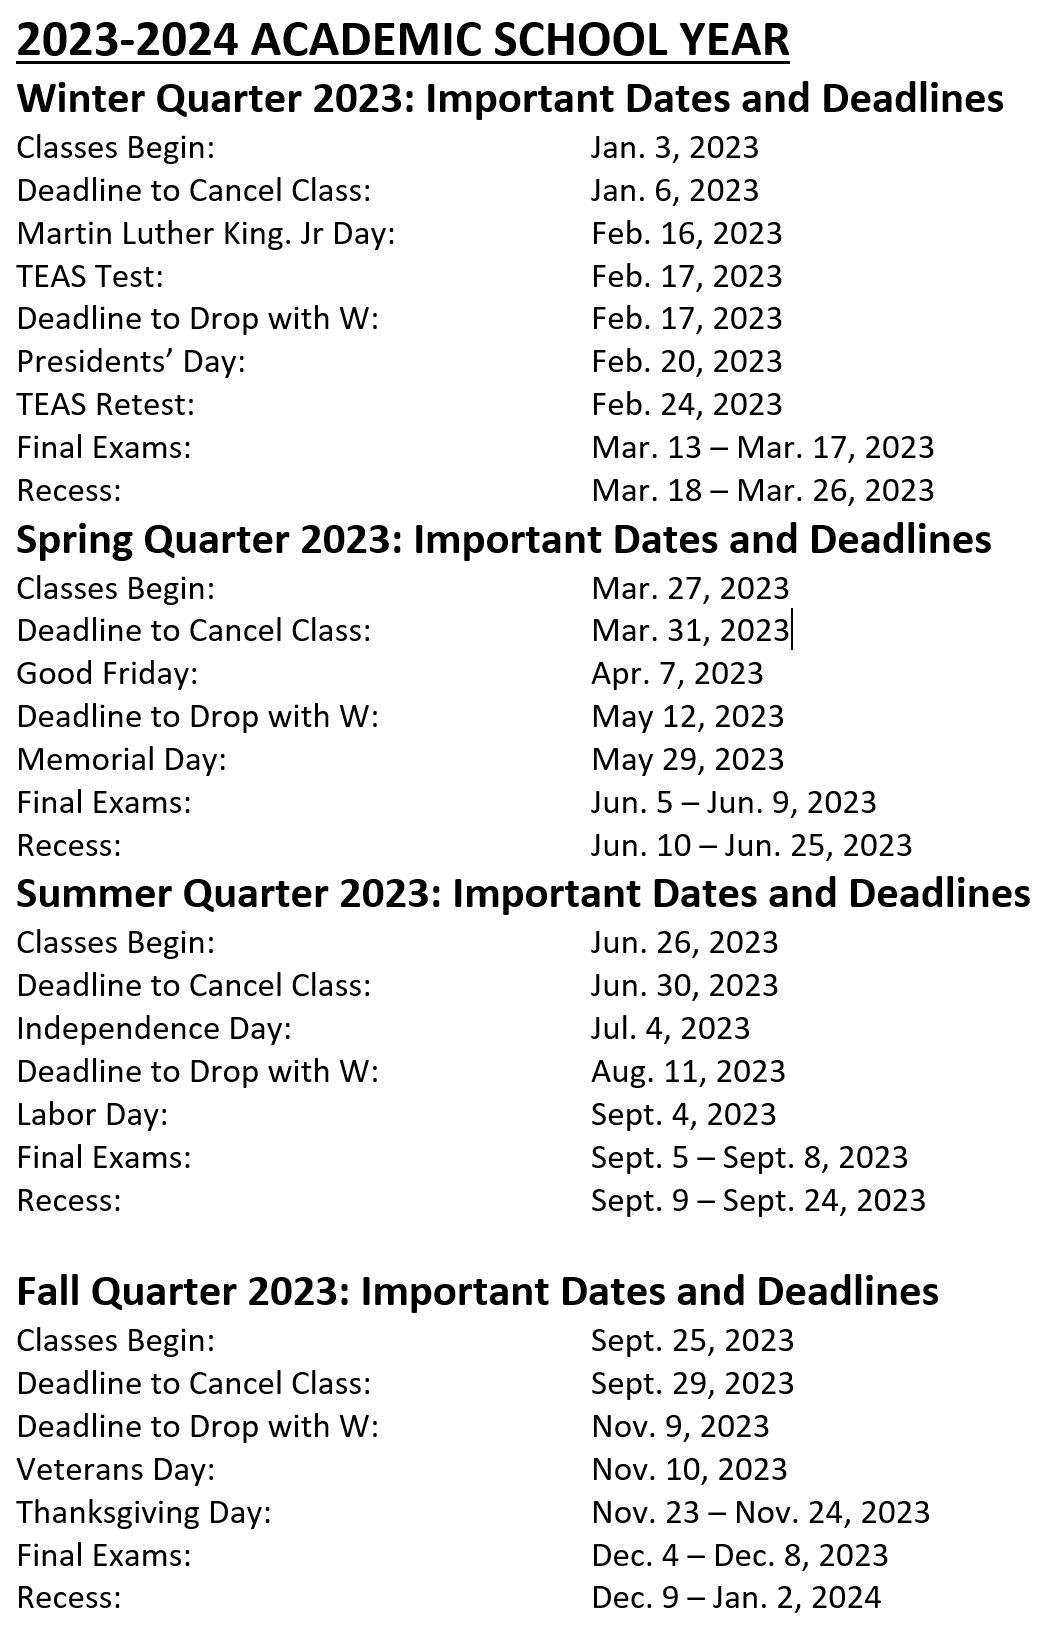 Academic Calendar 2023 2024 Purdue University Peri Trista